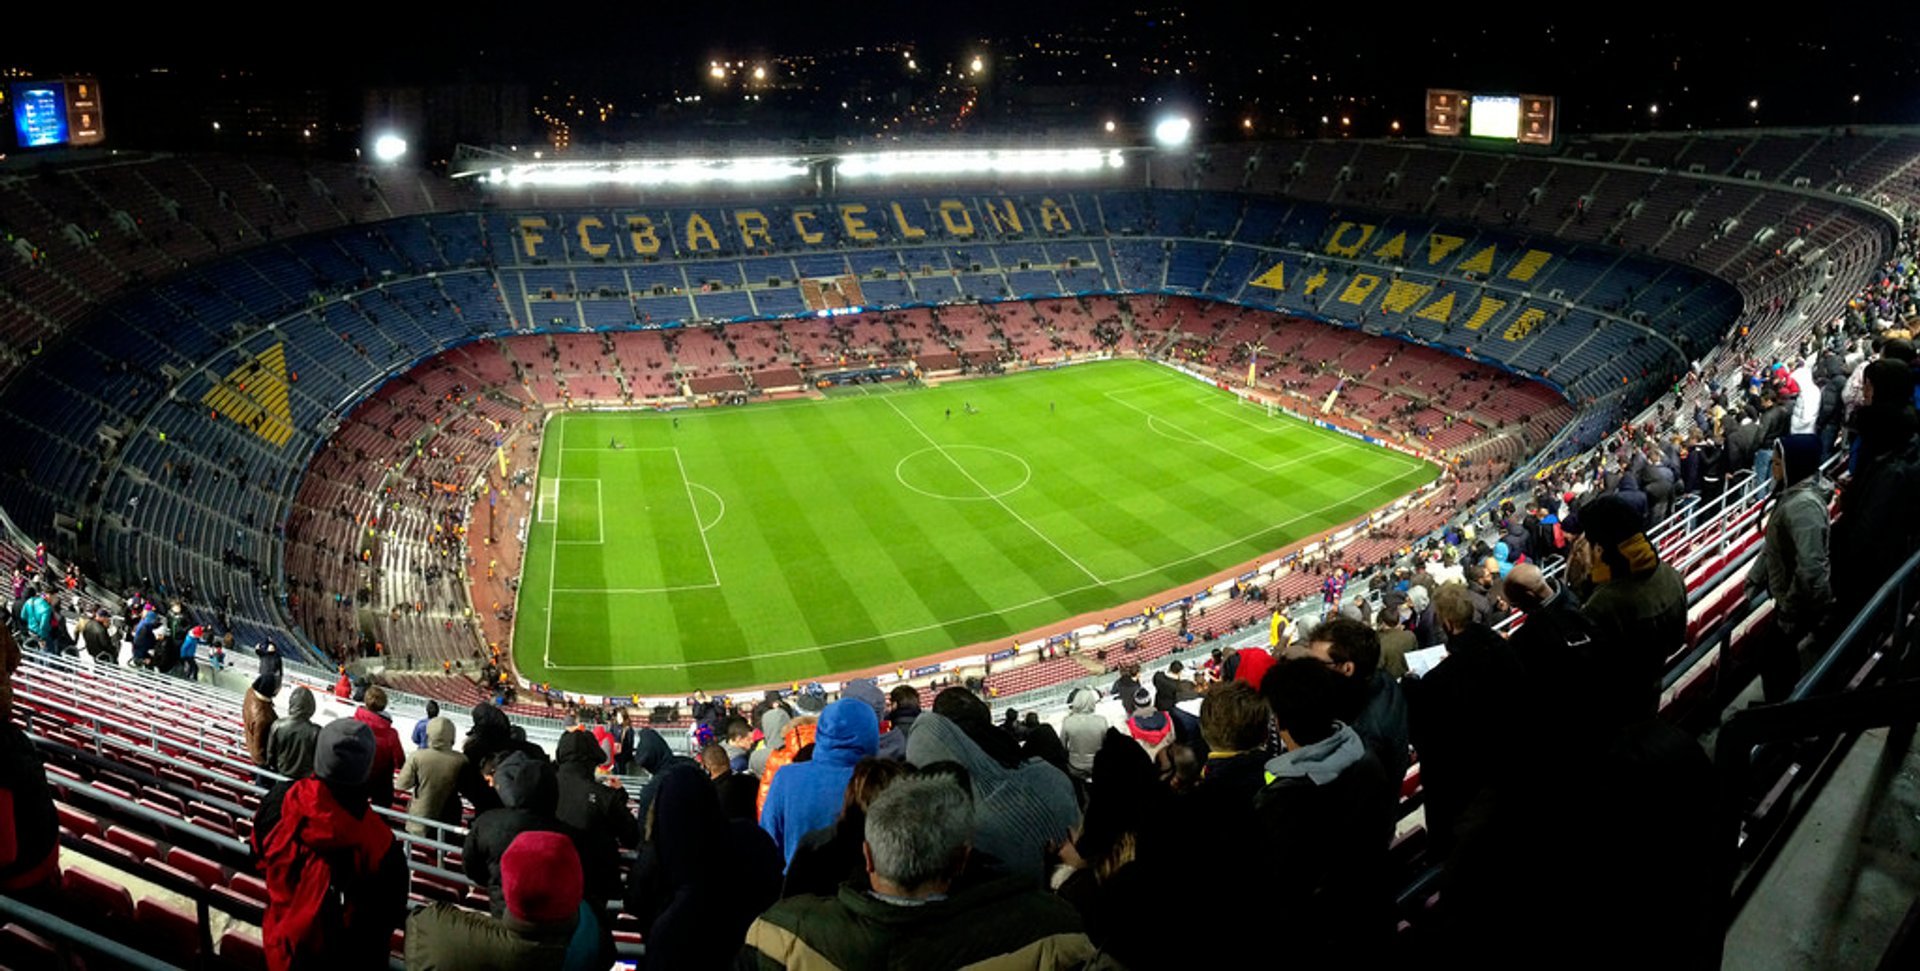 FC Barcelona and Camp Nou